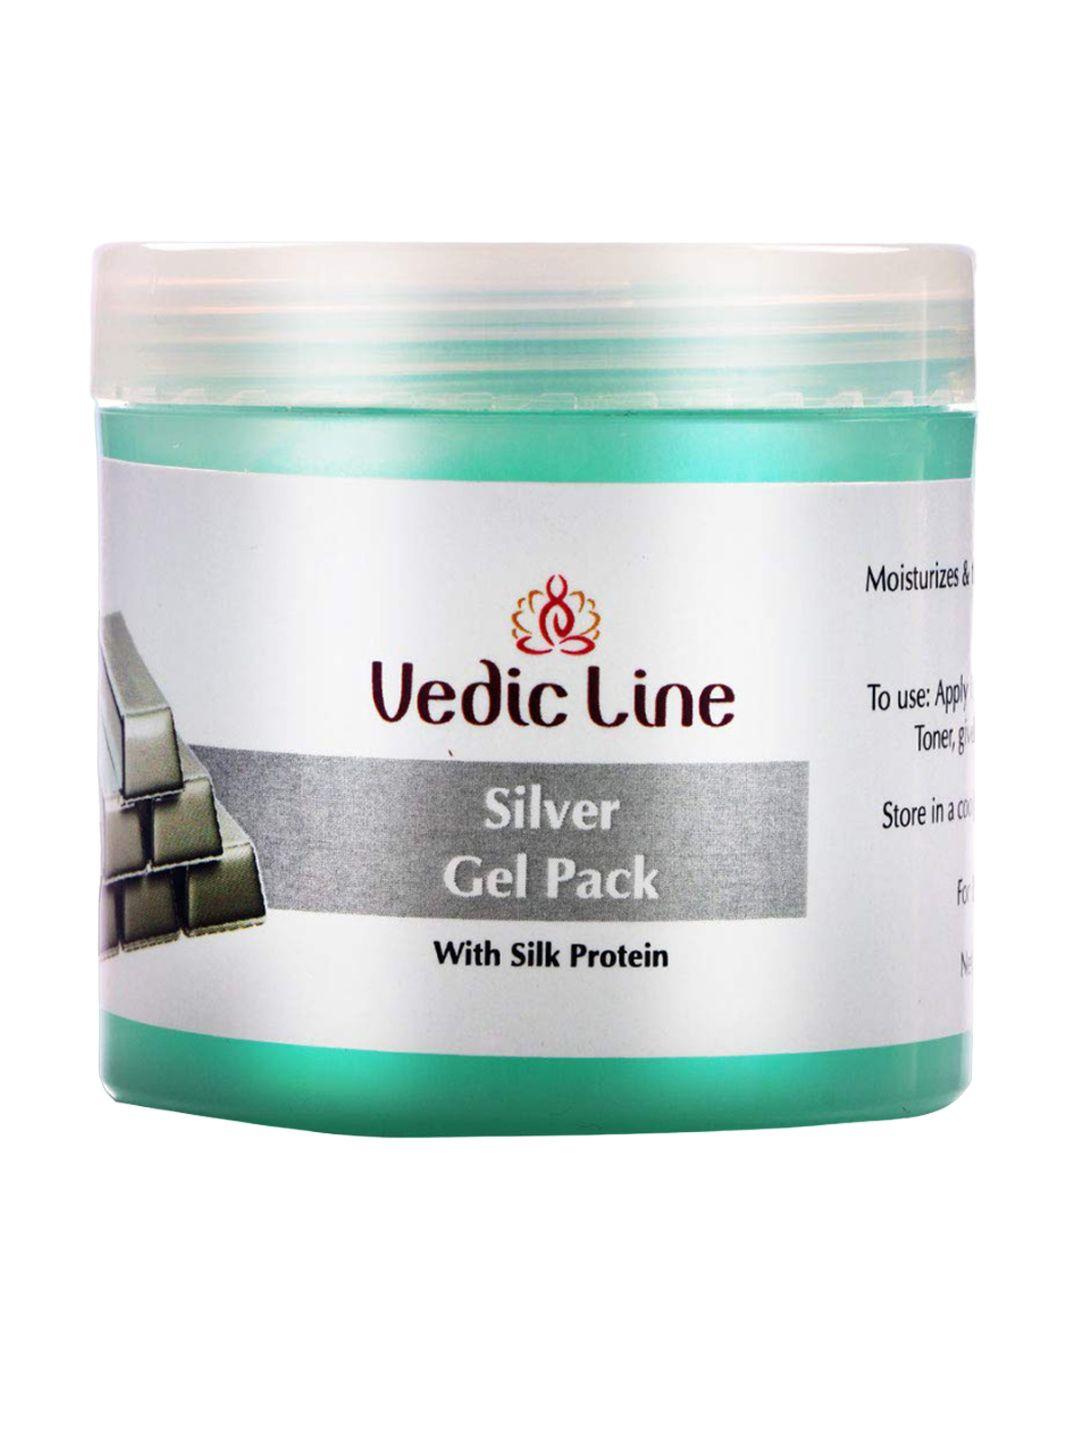 vedicline silver gel pack for skin elasticity - 100ml